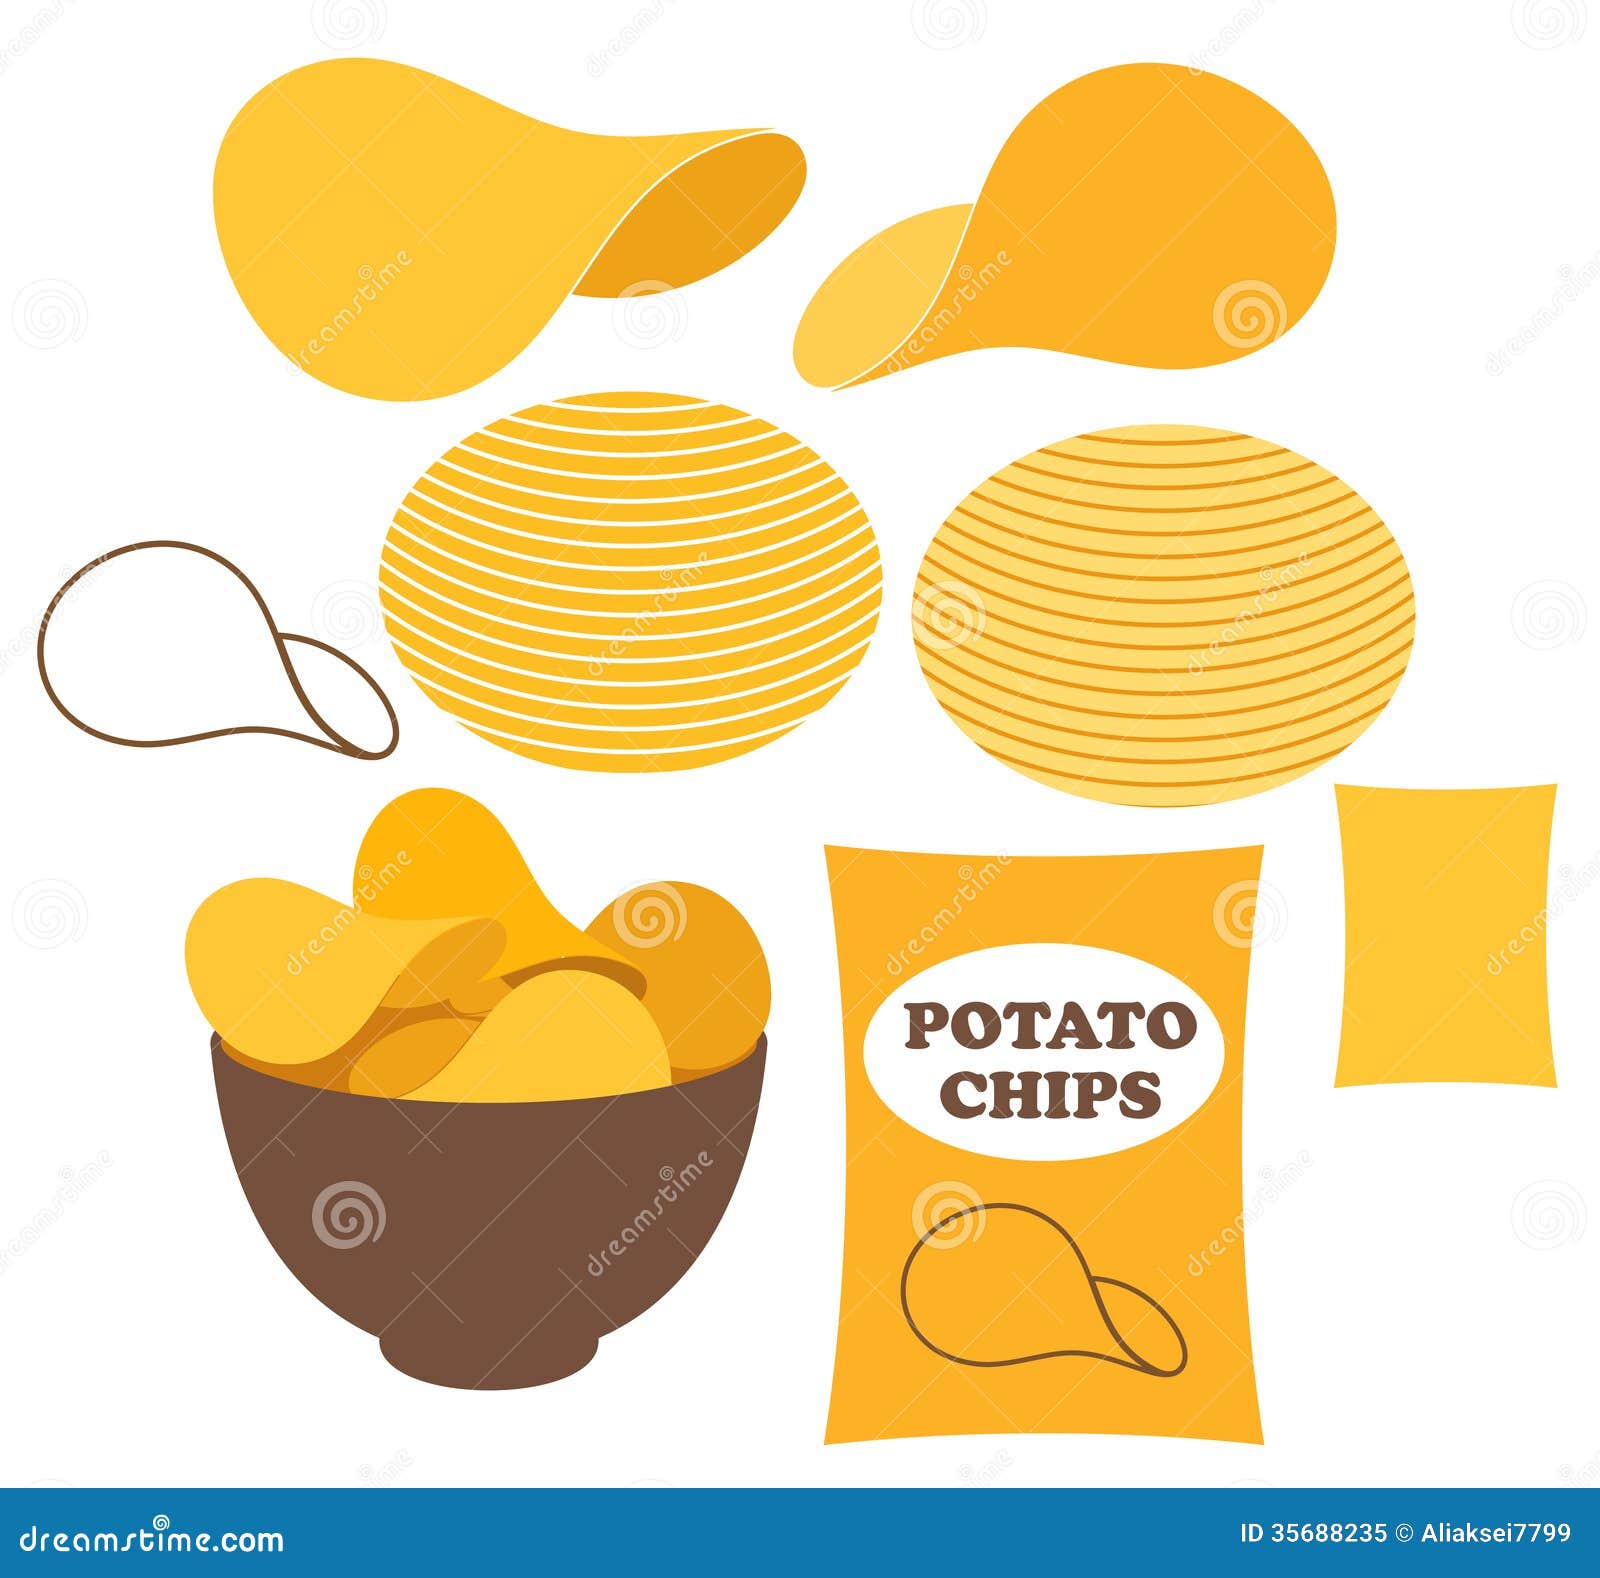 free clip art bag of potato chips - photo #38